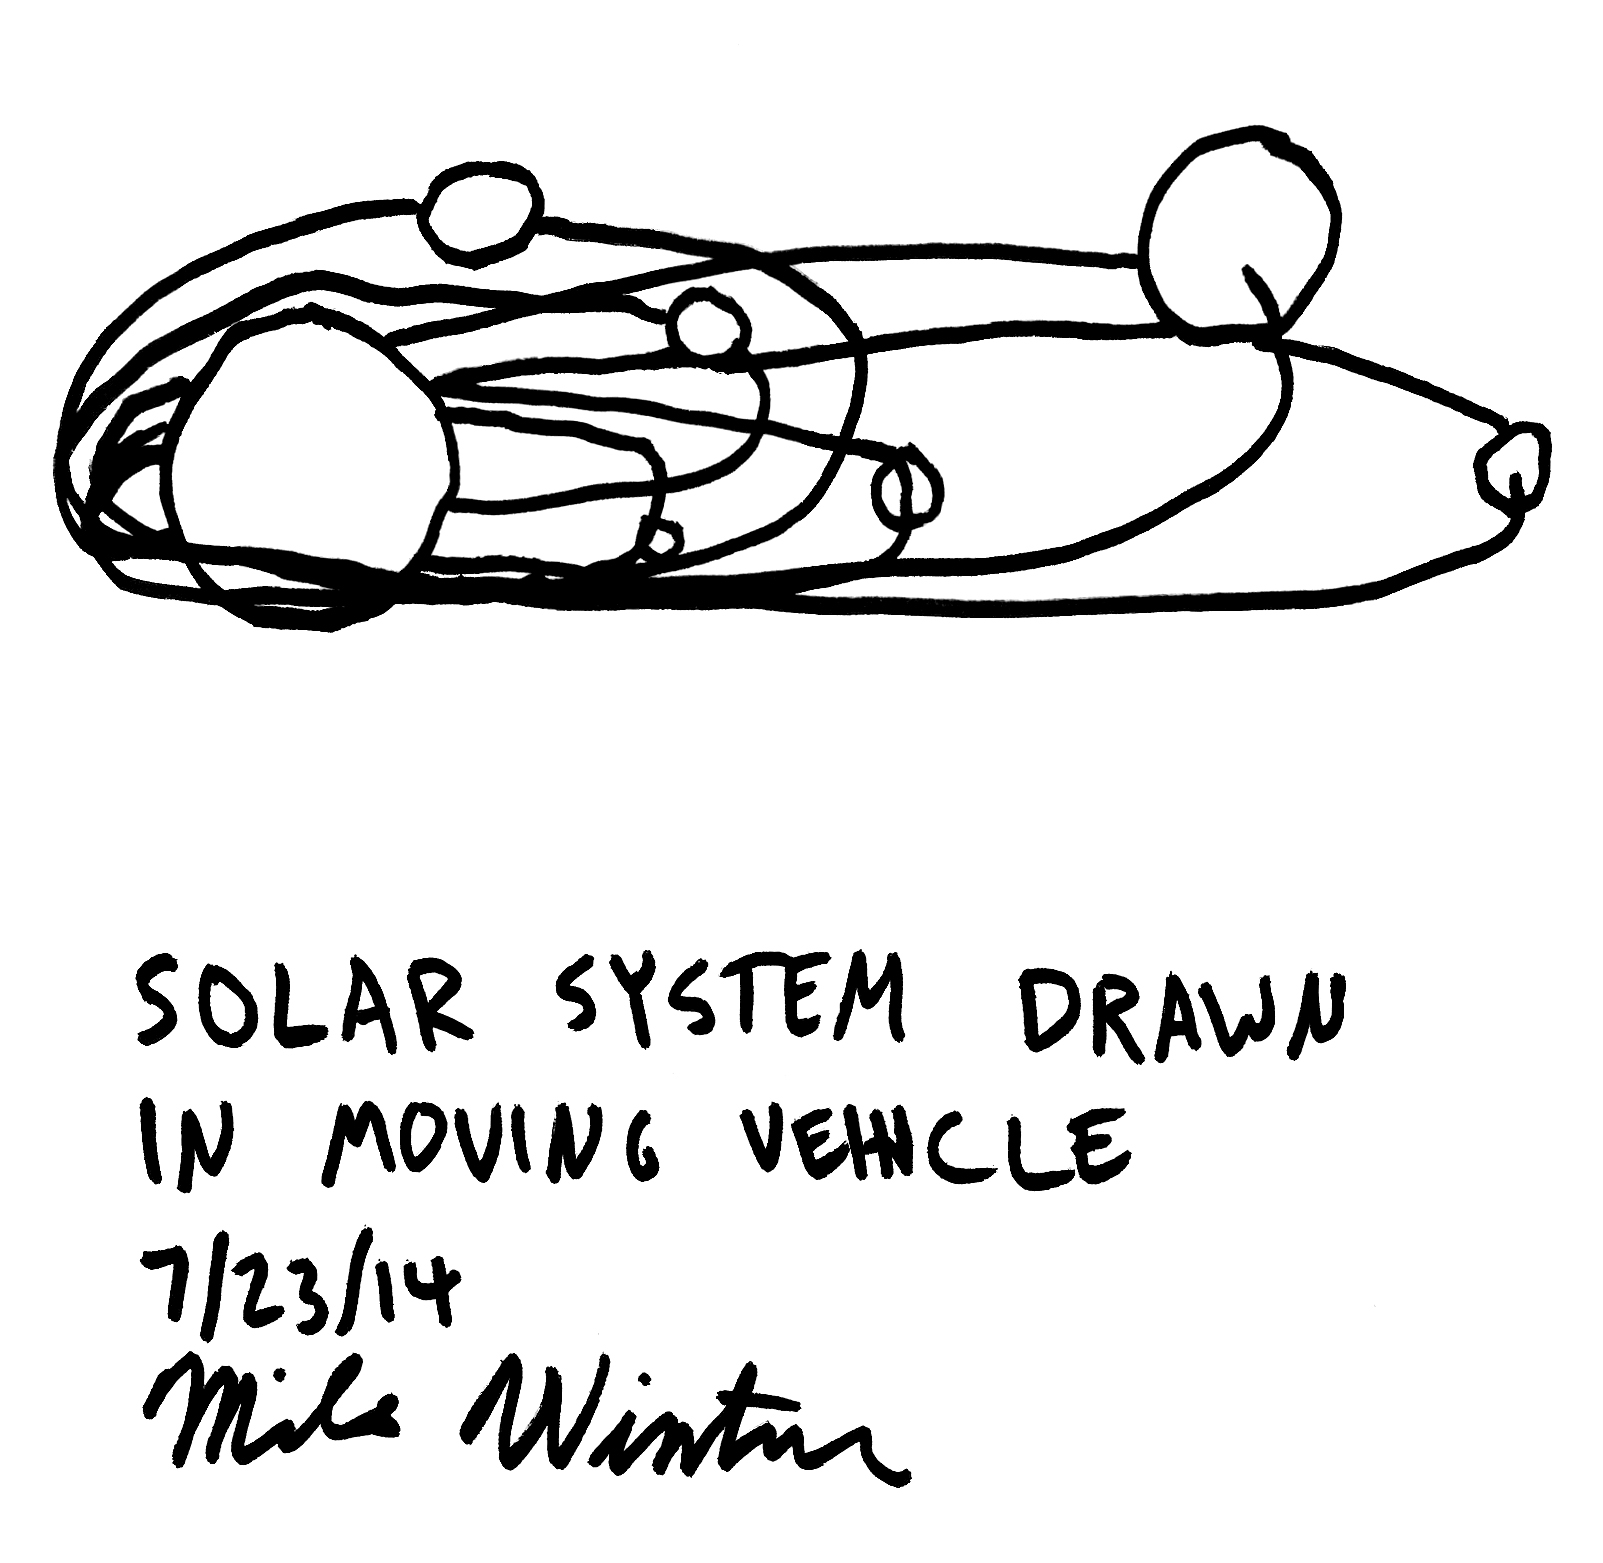 "Solar System"